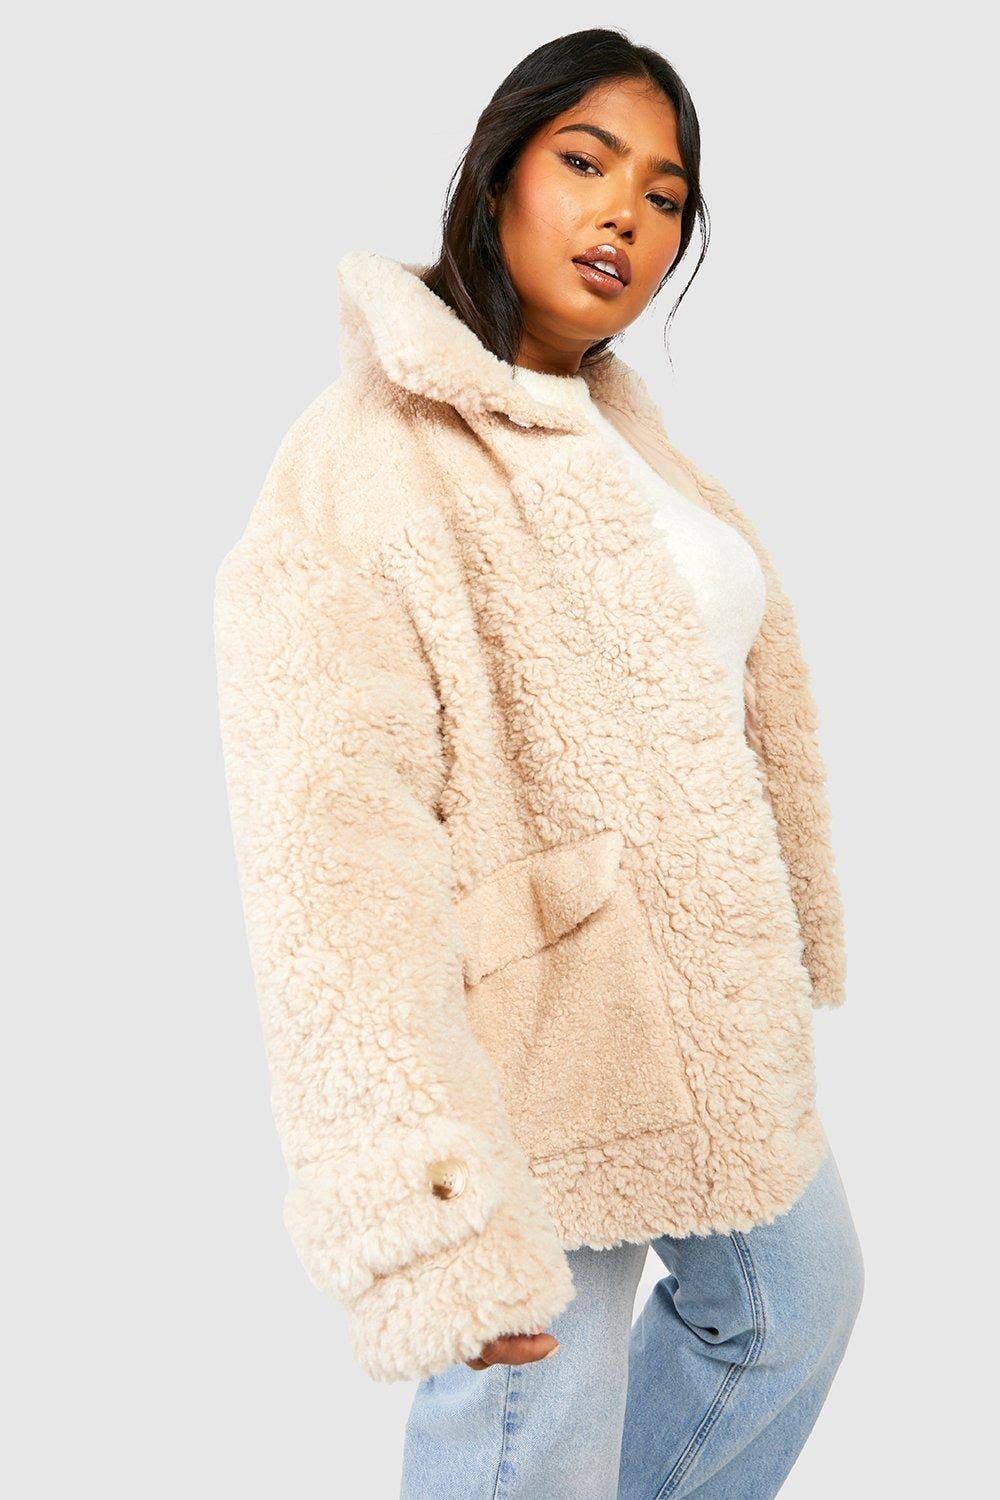 Cozy Beige Furry Jacket for Women's Plus Size | Image